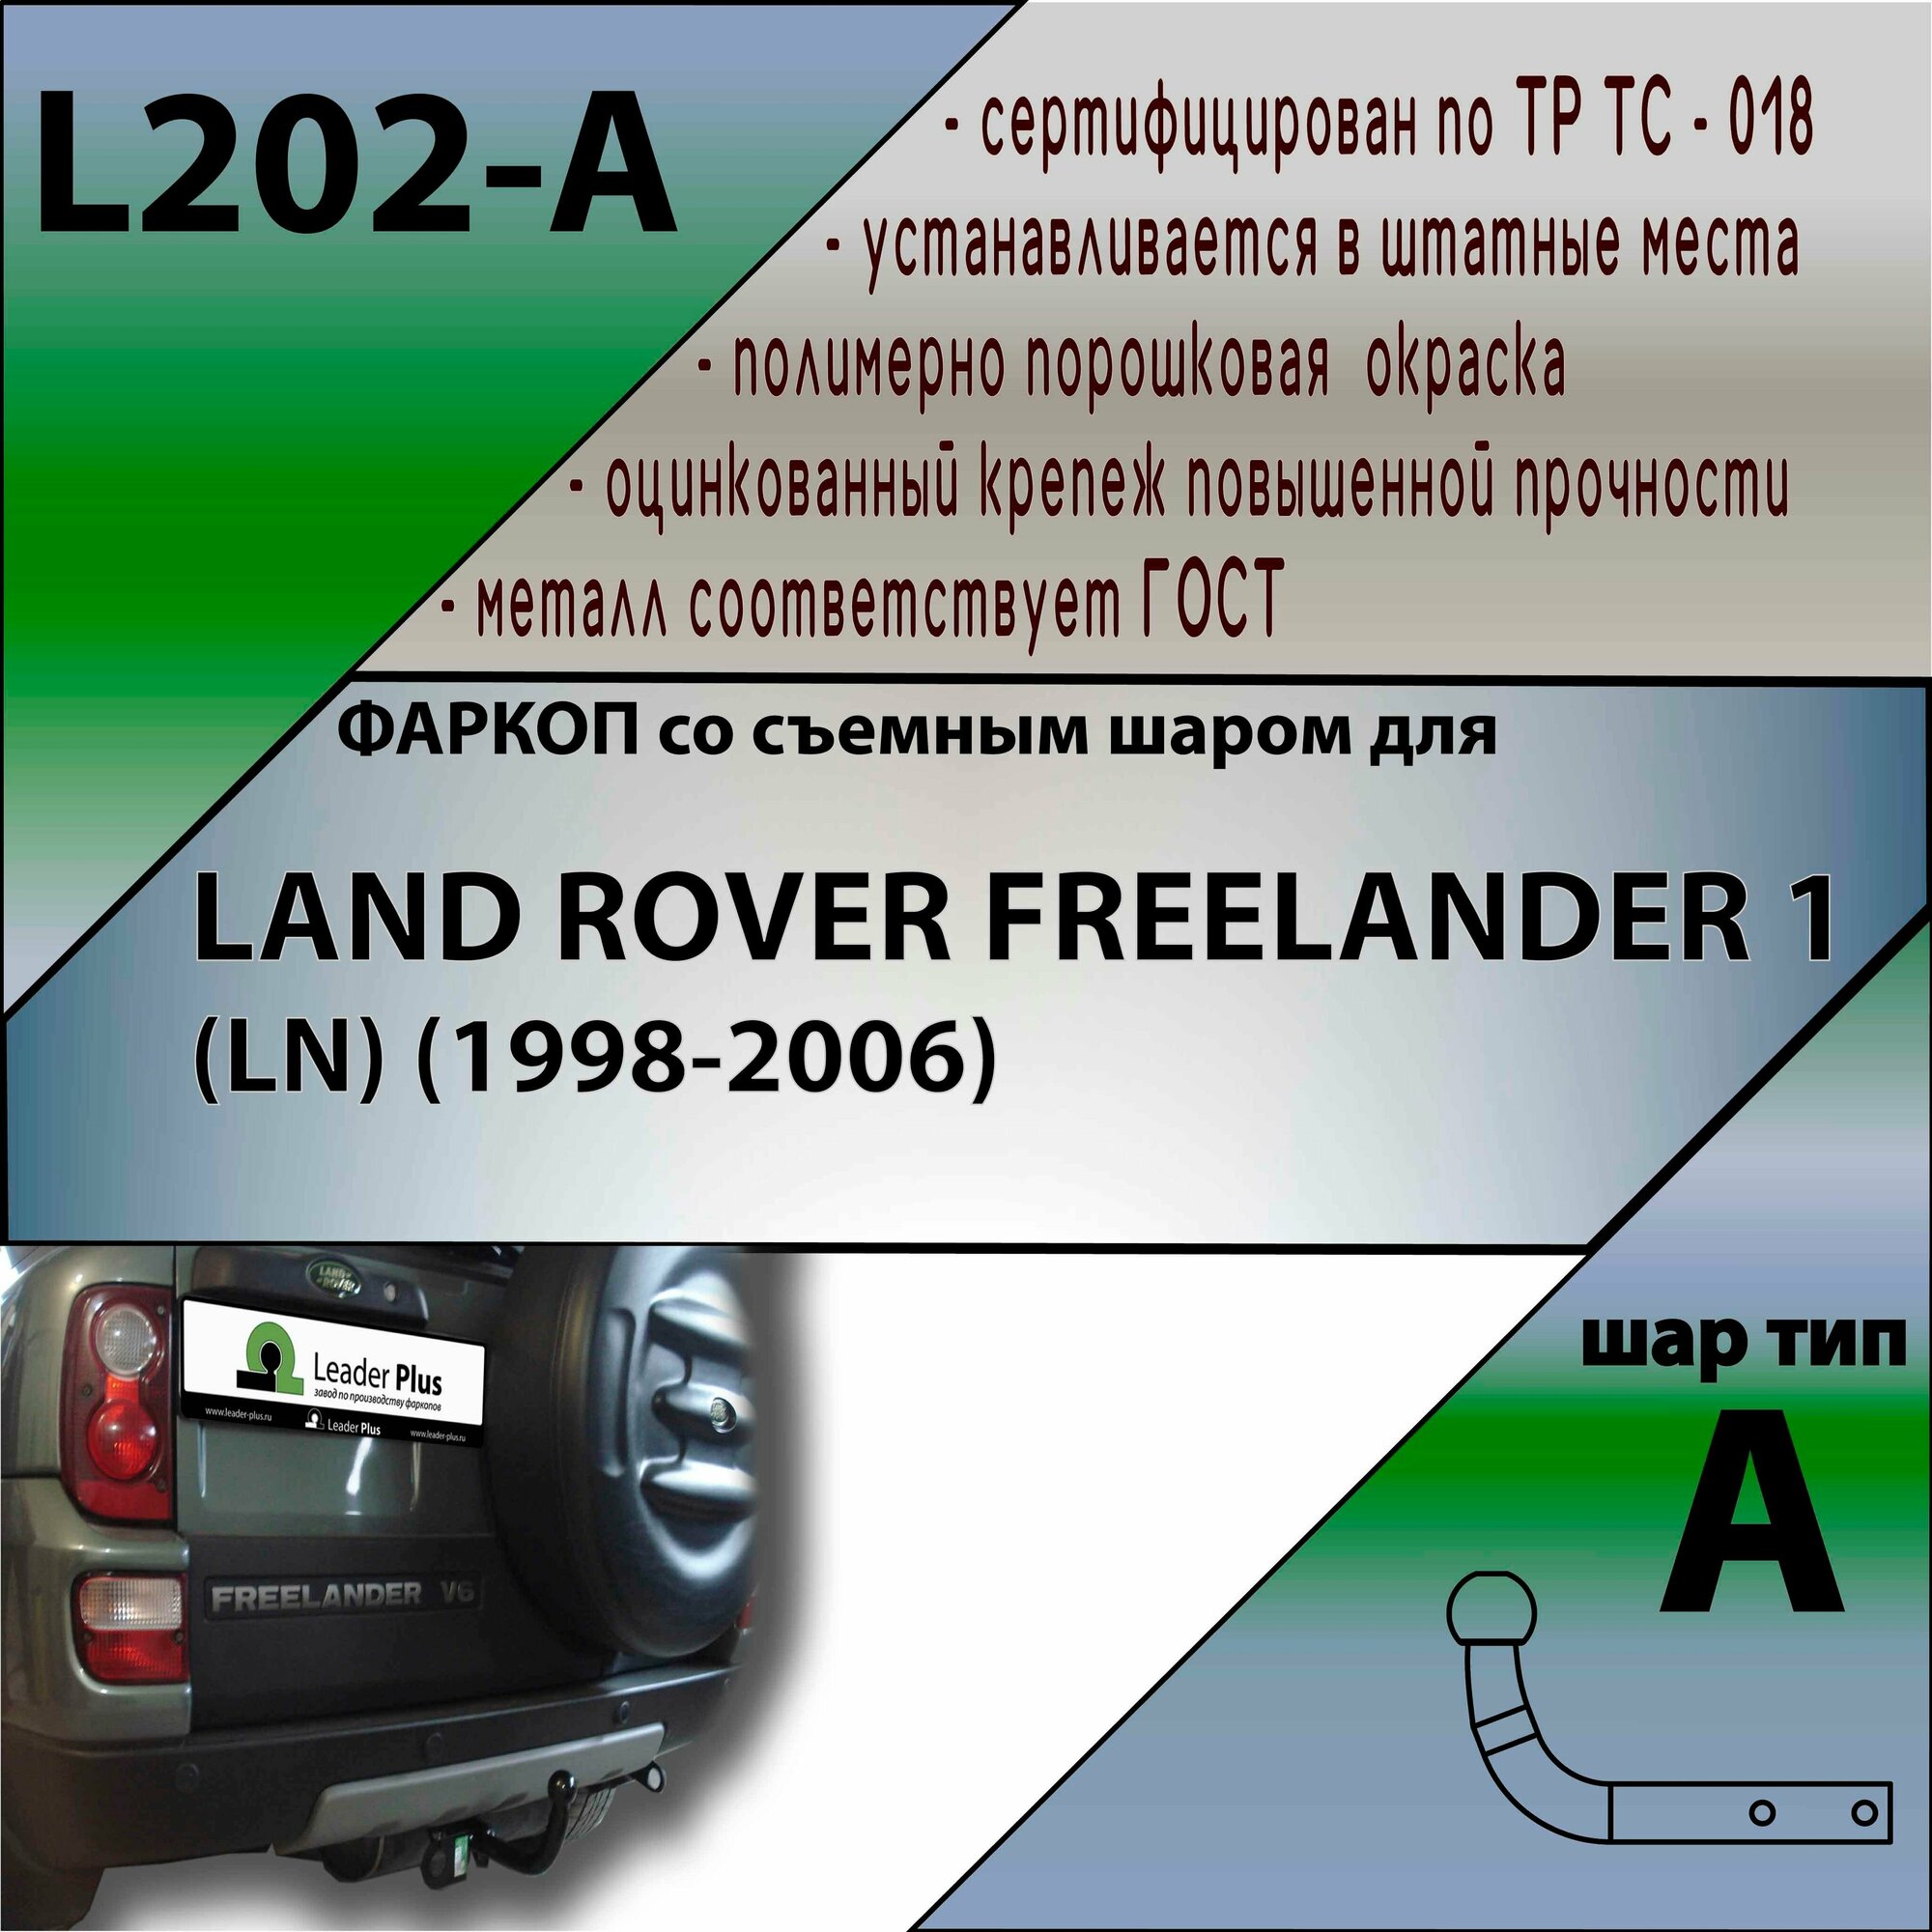 Фаркоп L202-A лидер плюс для LAND ROVER FREELANDER 1 (LN) (1998-2006 (без электрики)